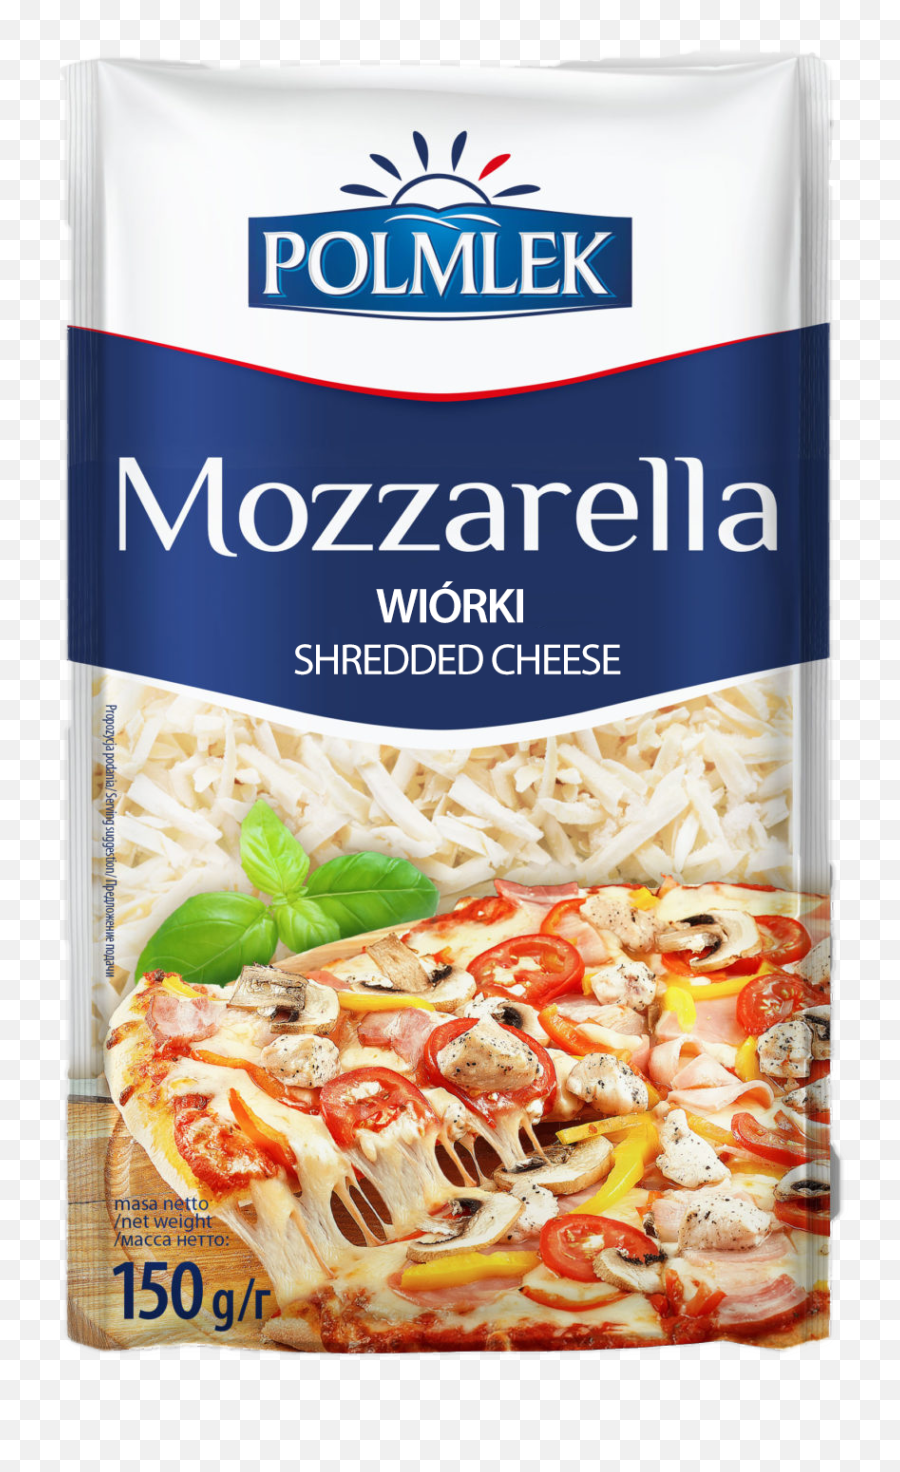 POLMLEK Mozzarella cheese shredded